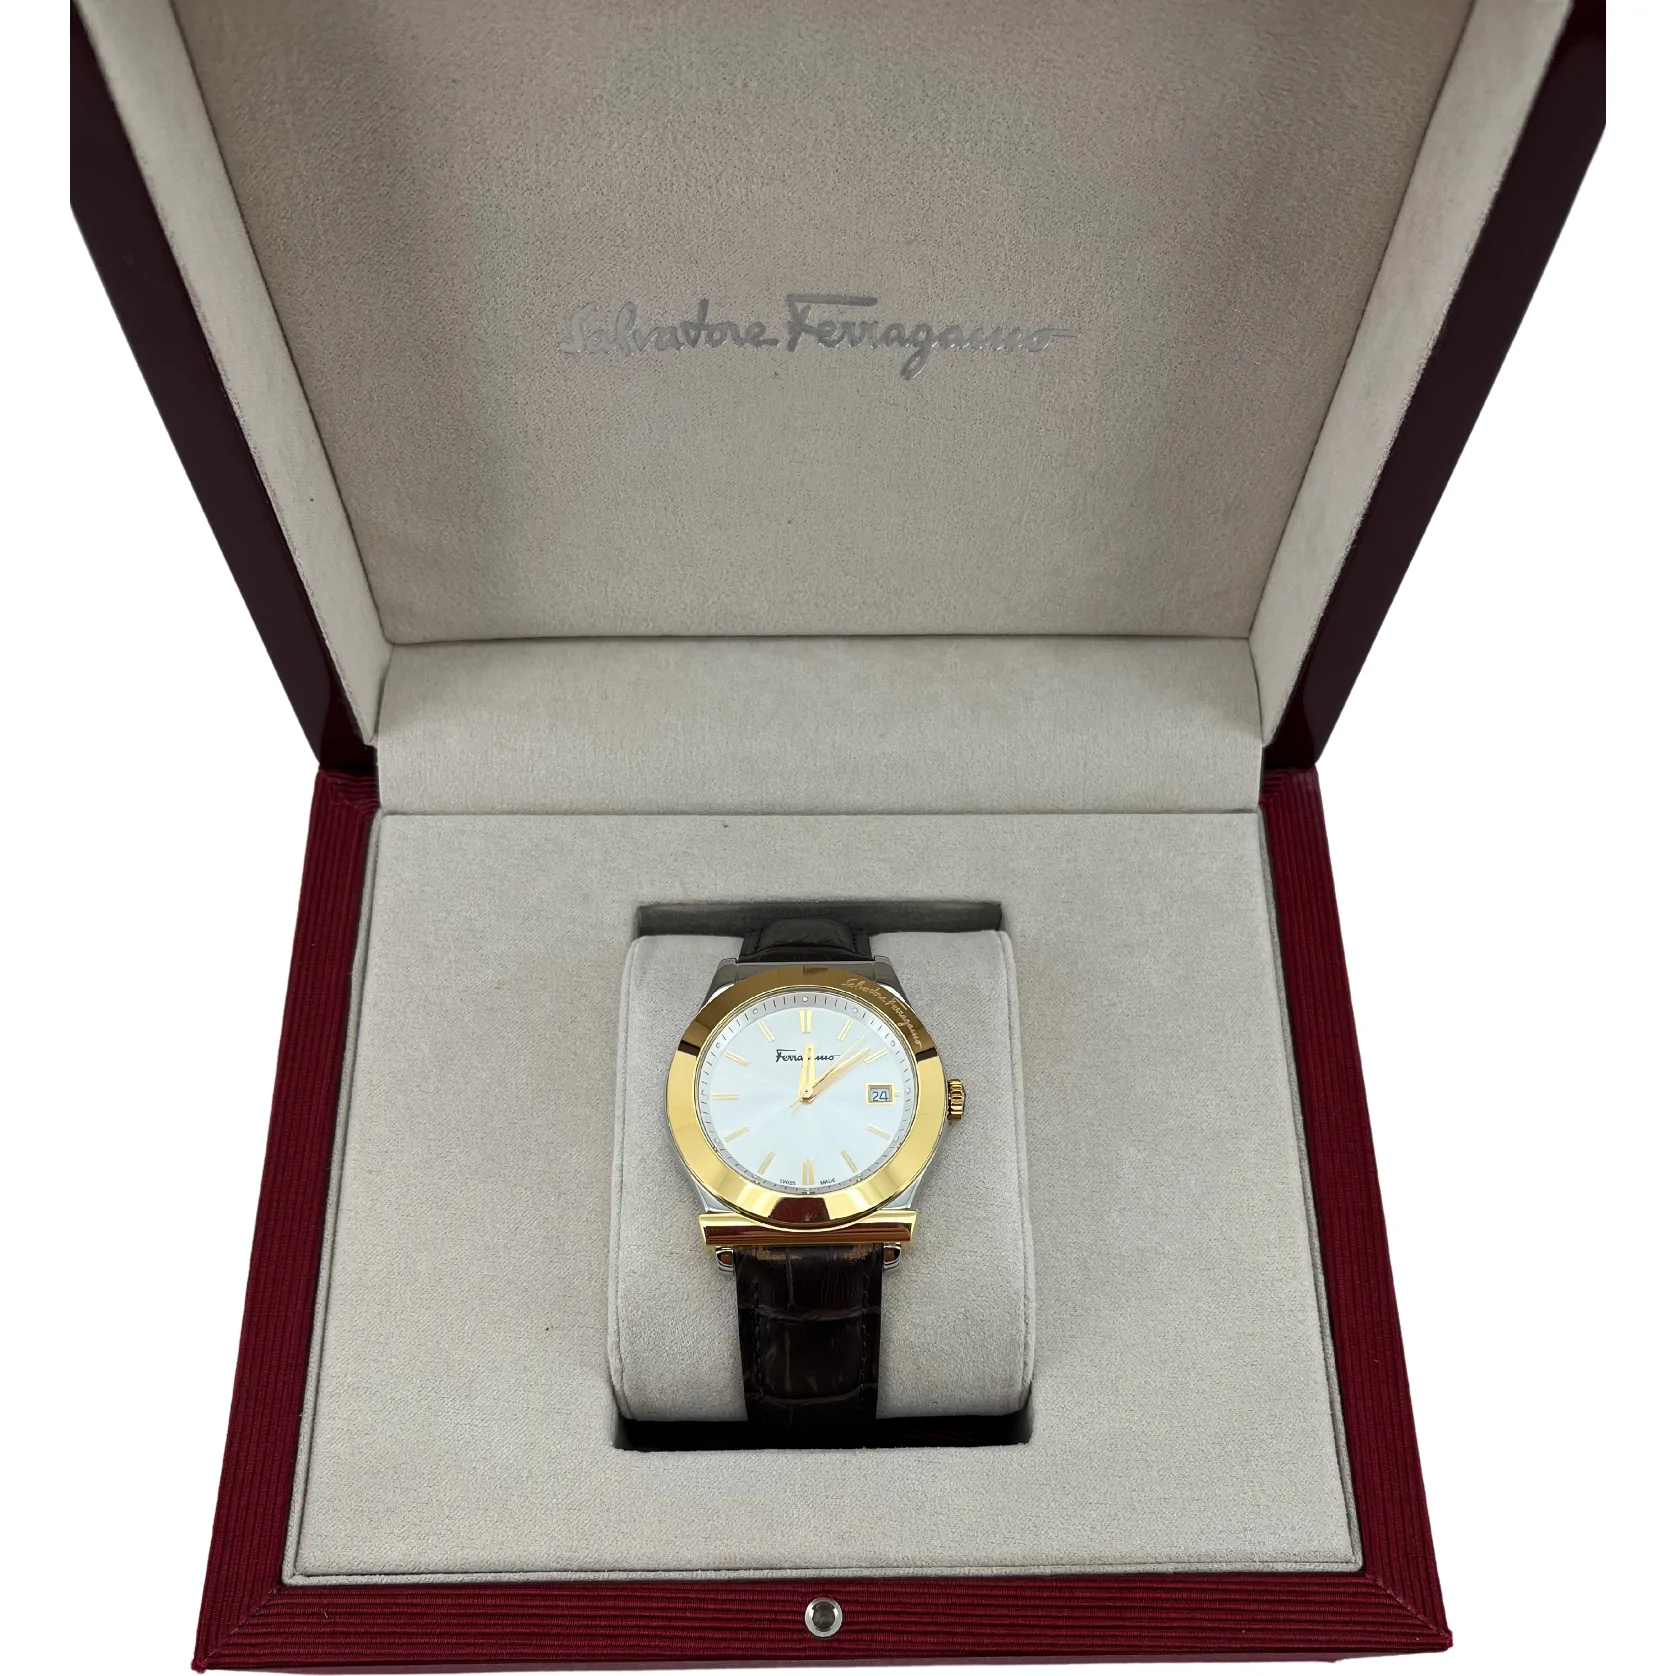 Salvatore Ferragamo Men's Watch: Firenze FF3 / Gold Case / Brown Leather